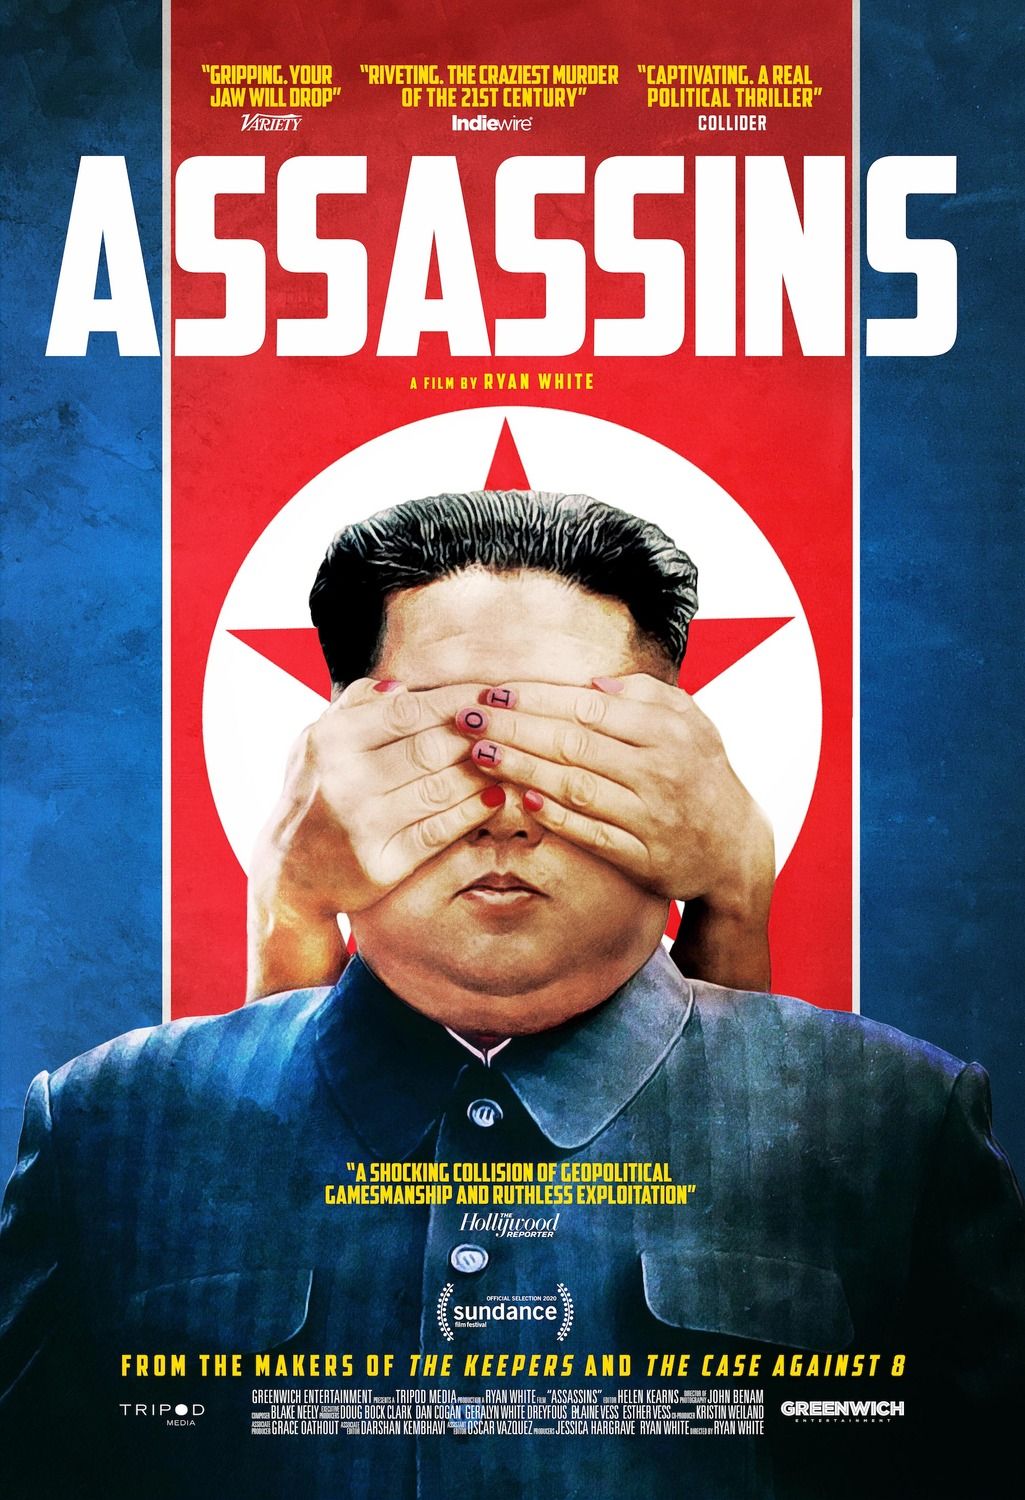 Assassins (2020) Hindi Dubbed Full Movie